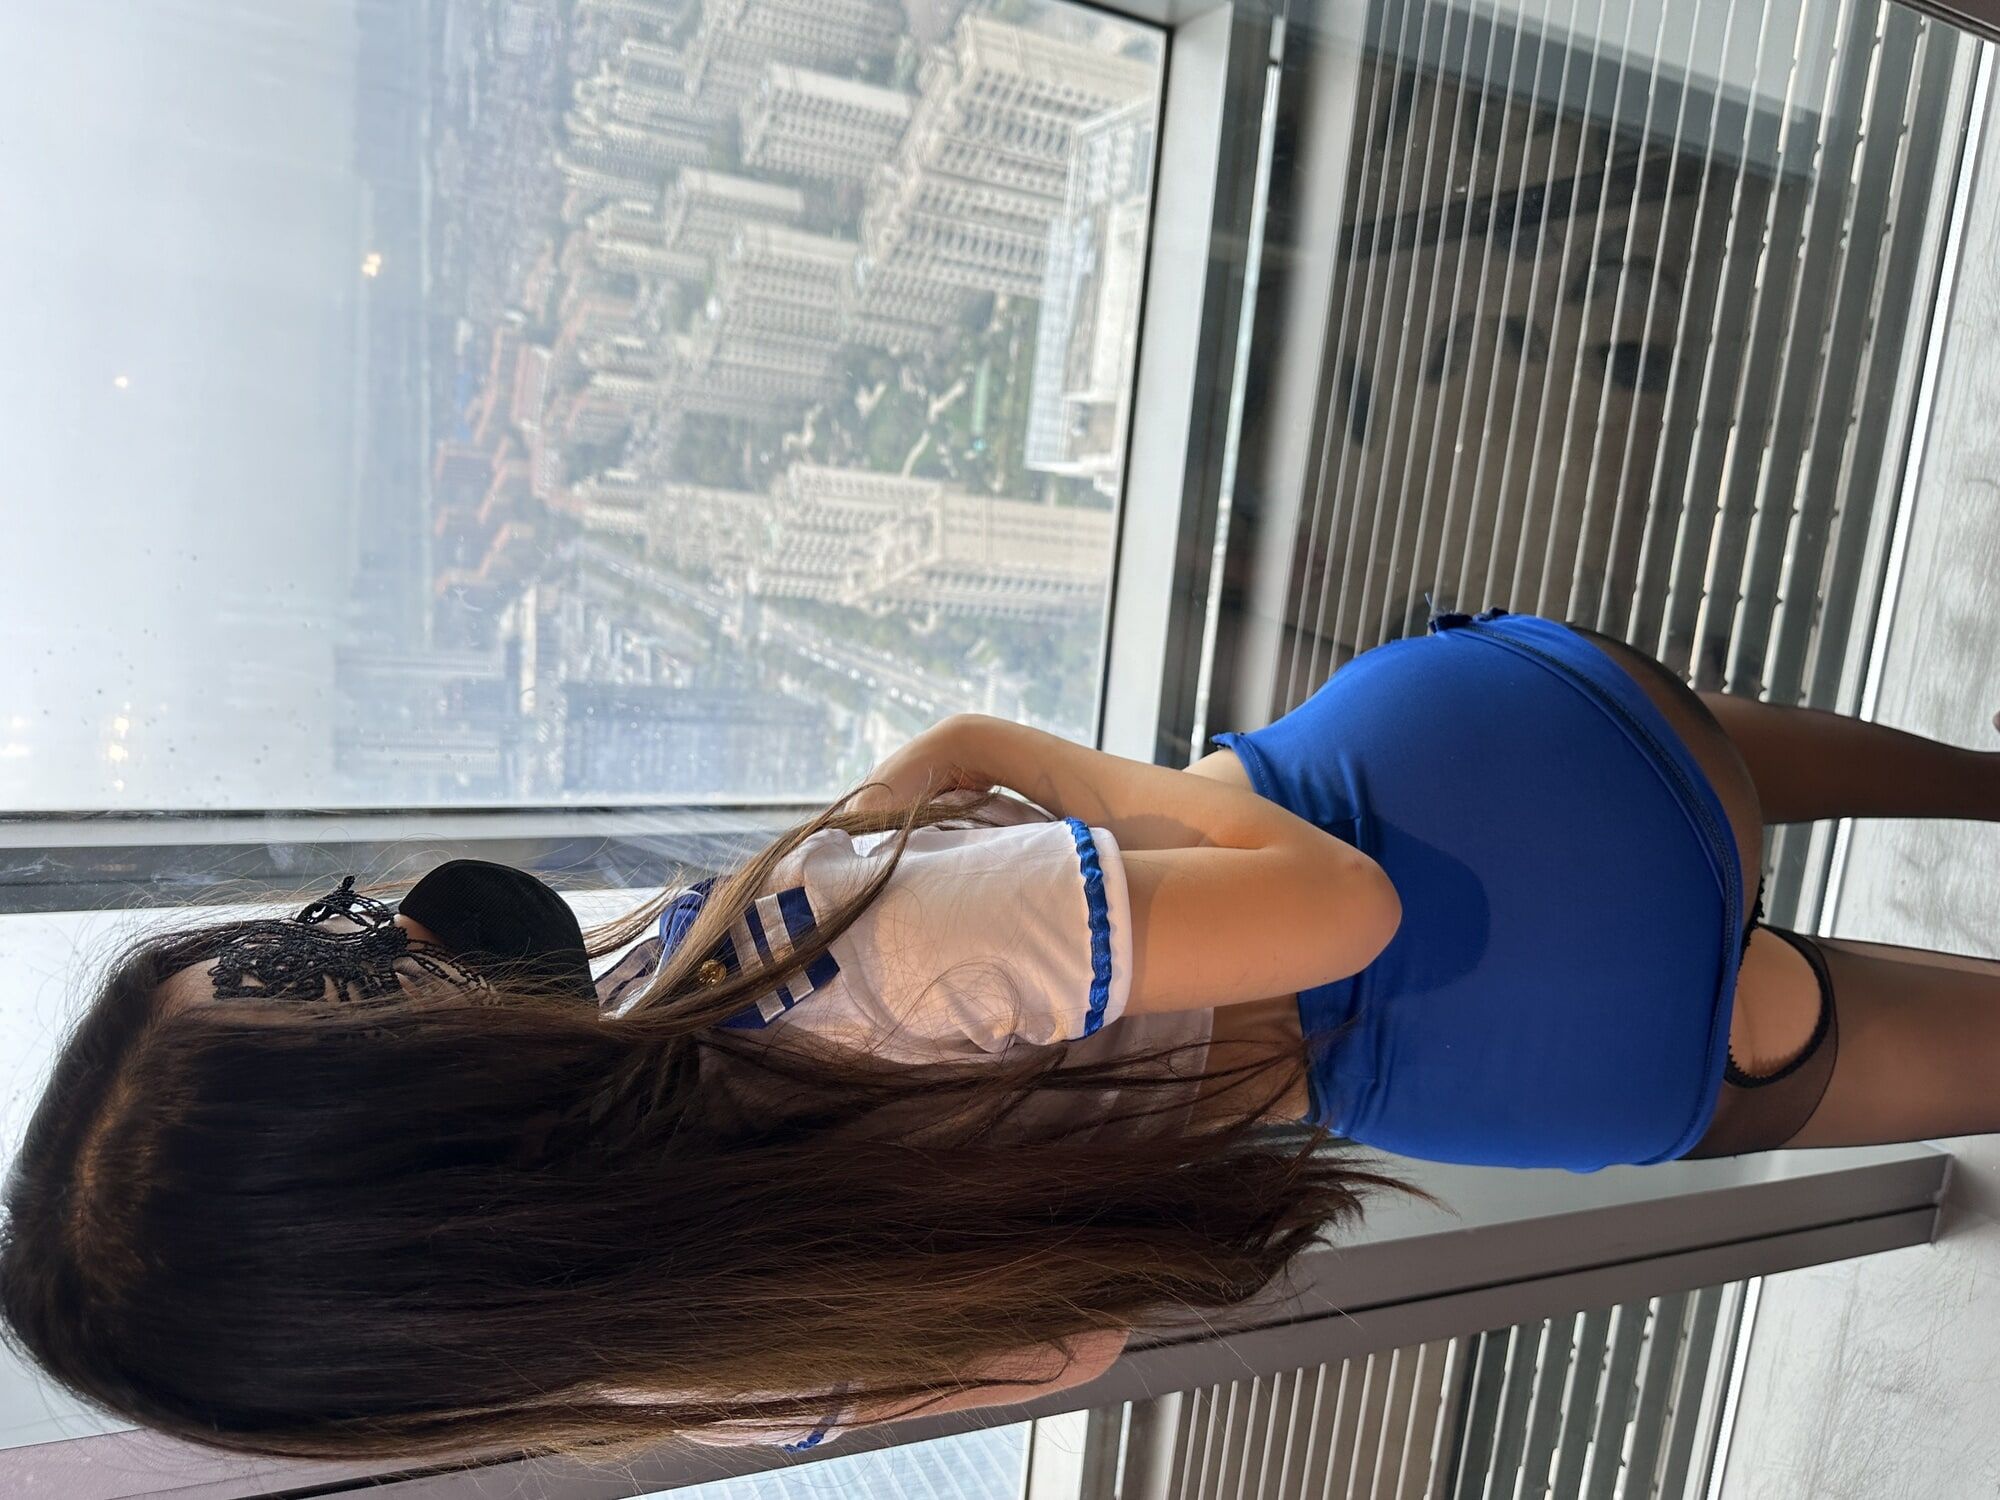 On the 58th floor #4